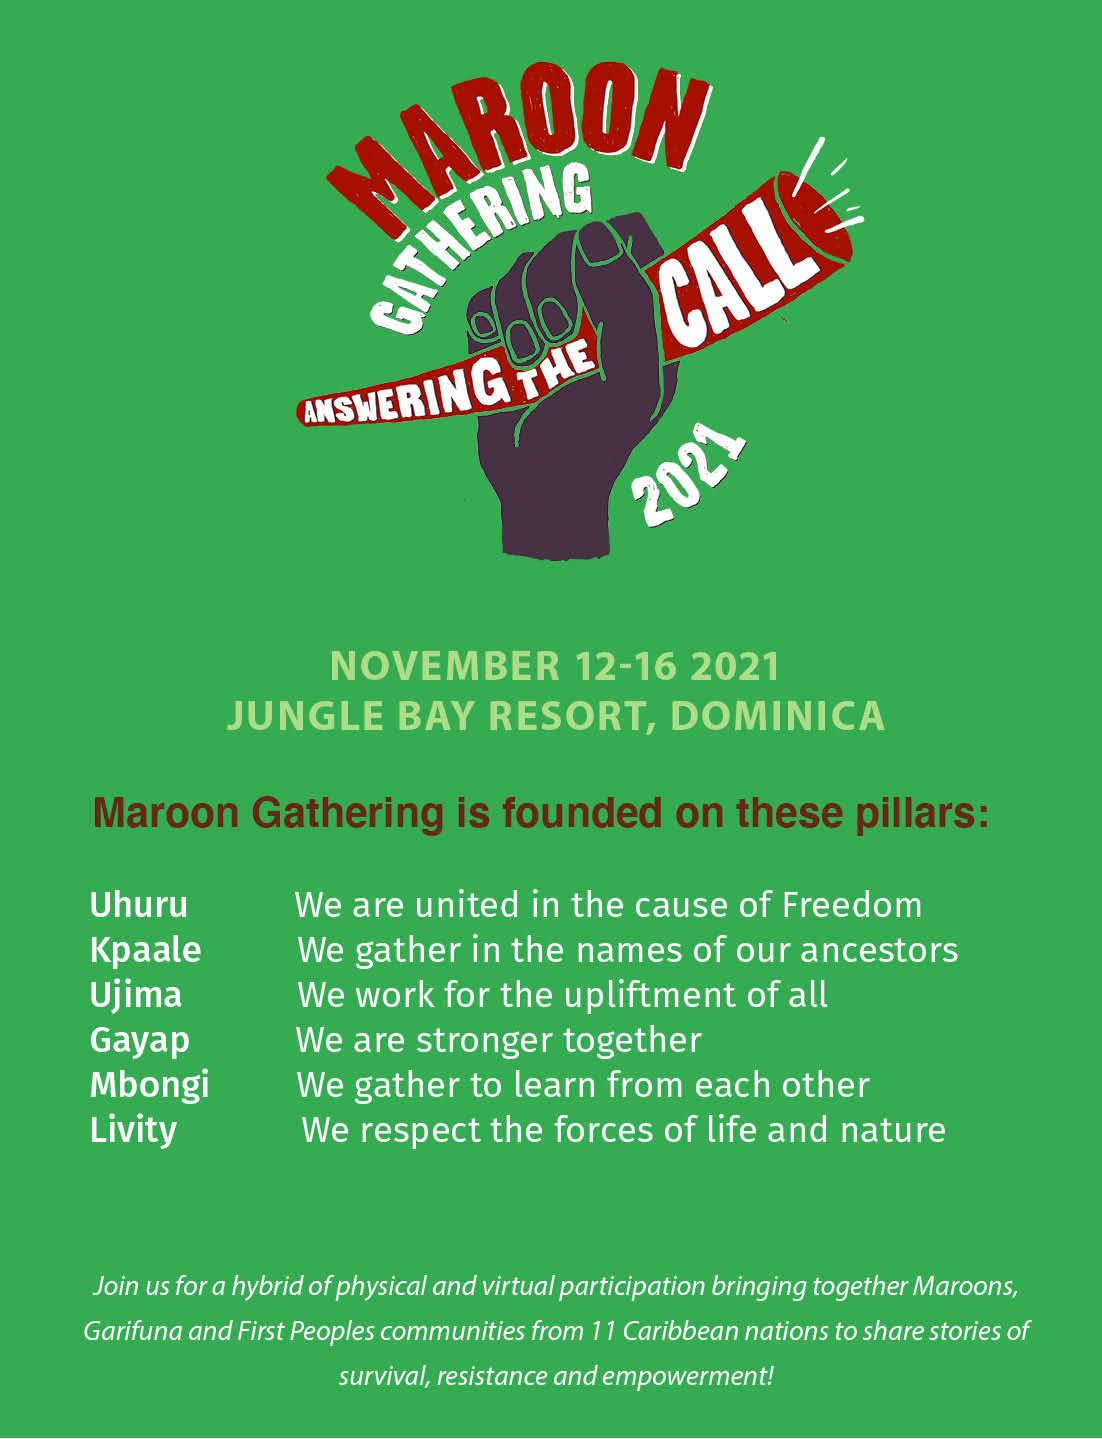 Maroon Gathering 2021 - Jungle Bay, Dominica